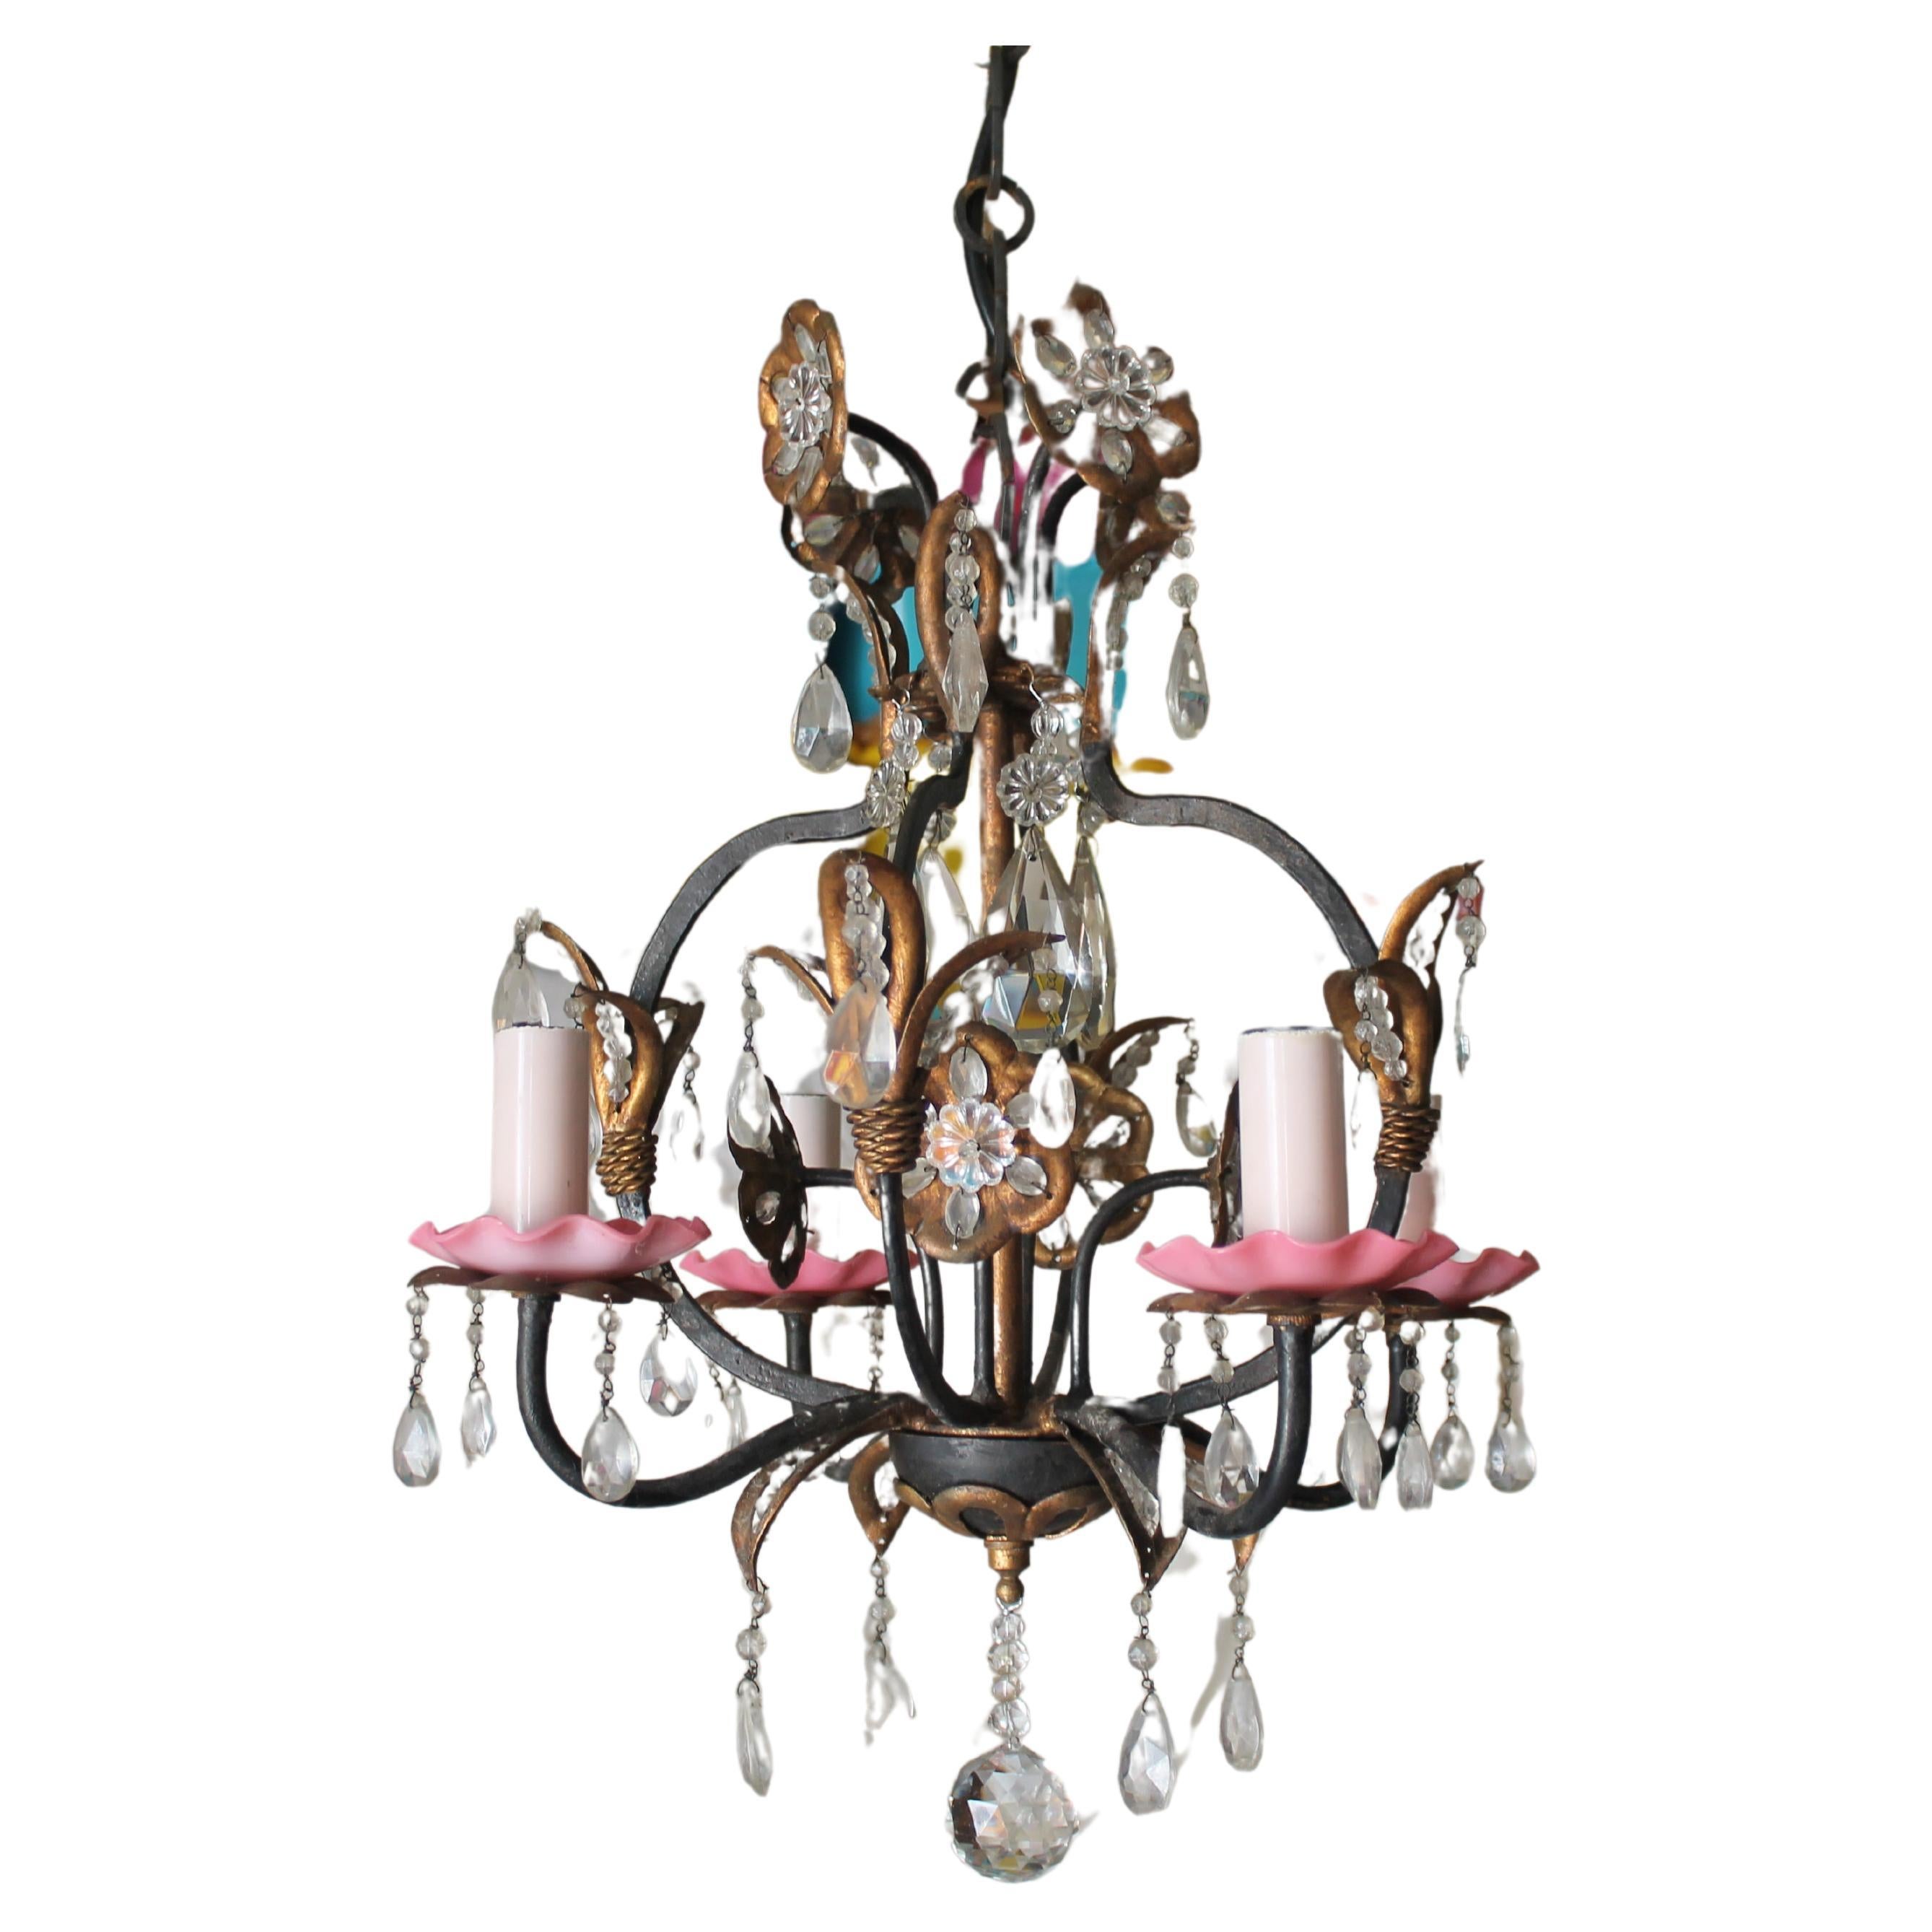 c1900 Petite French Art Nouveau Cut Crystal Floral Form Chandelier Shabby & Chic For Sale